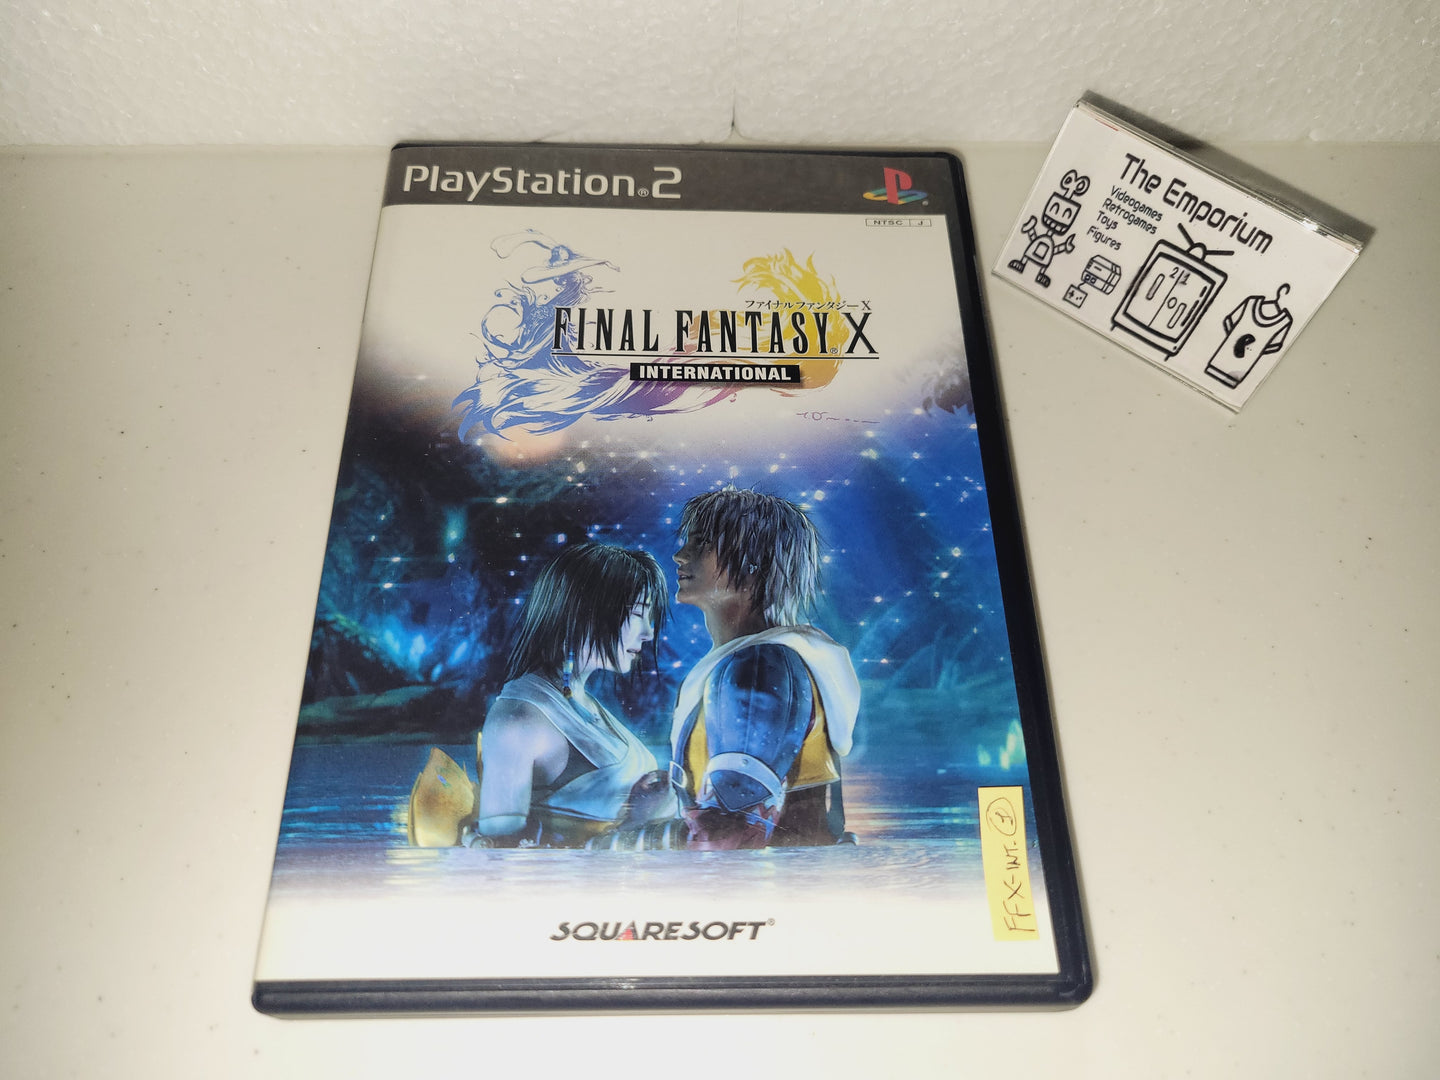 Final Fantasy X International (with Bonus DVD) - Sony playstation 2